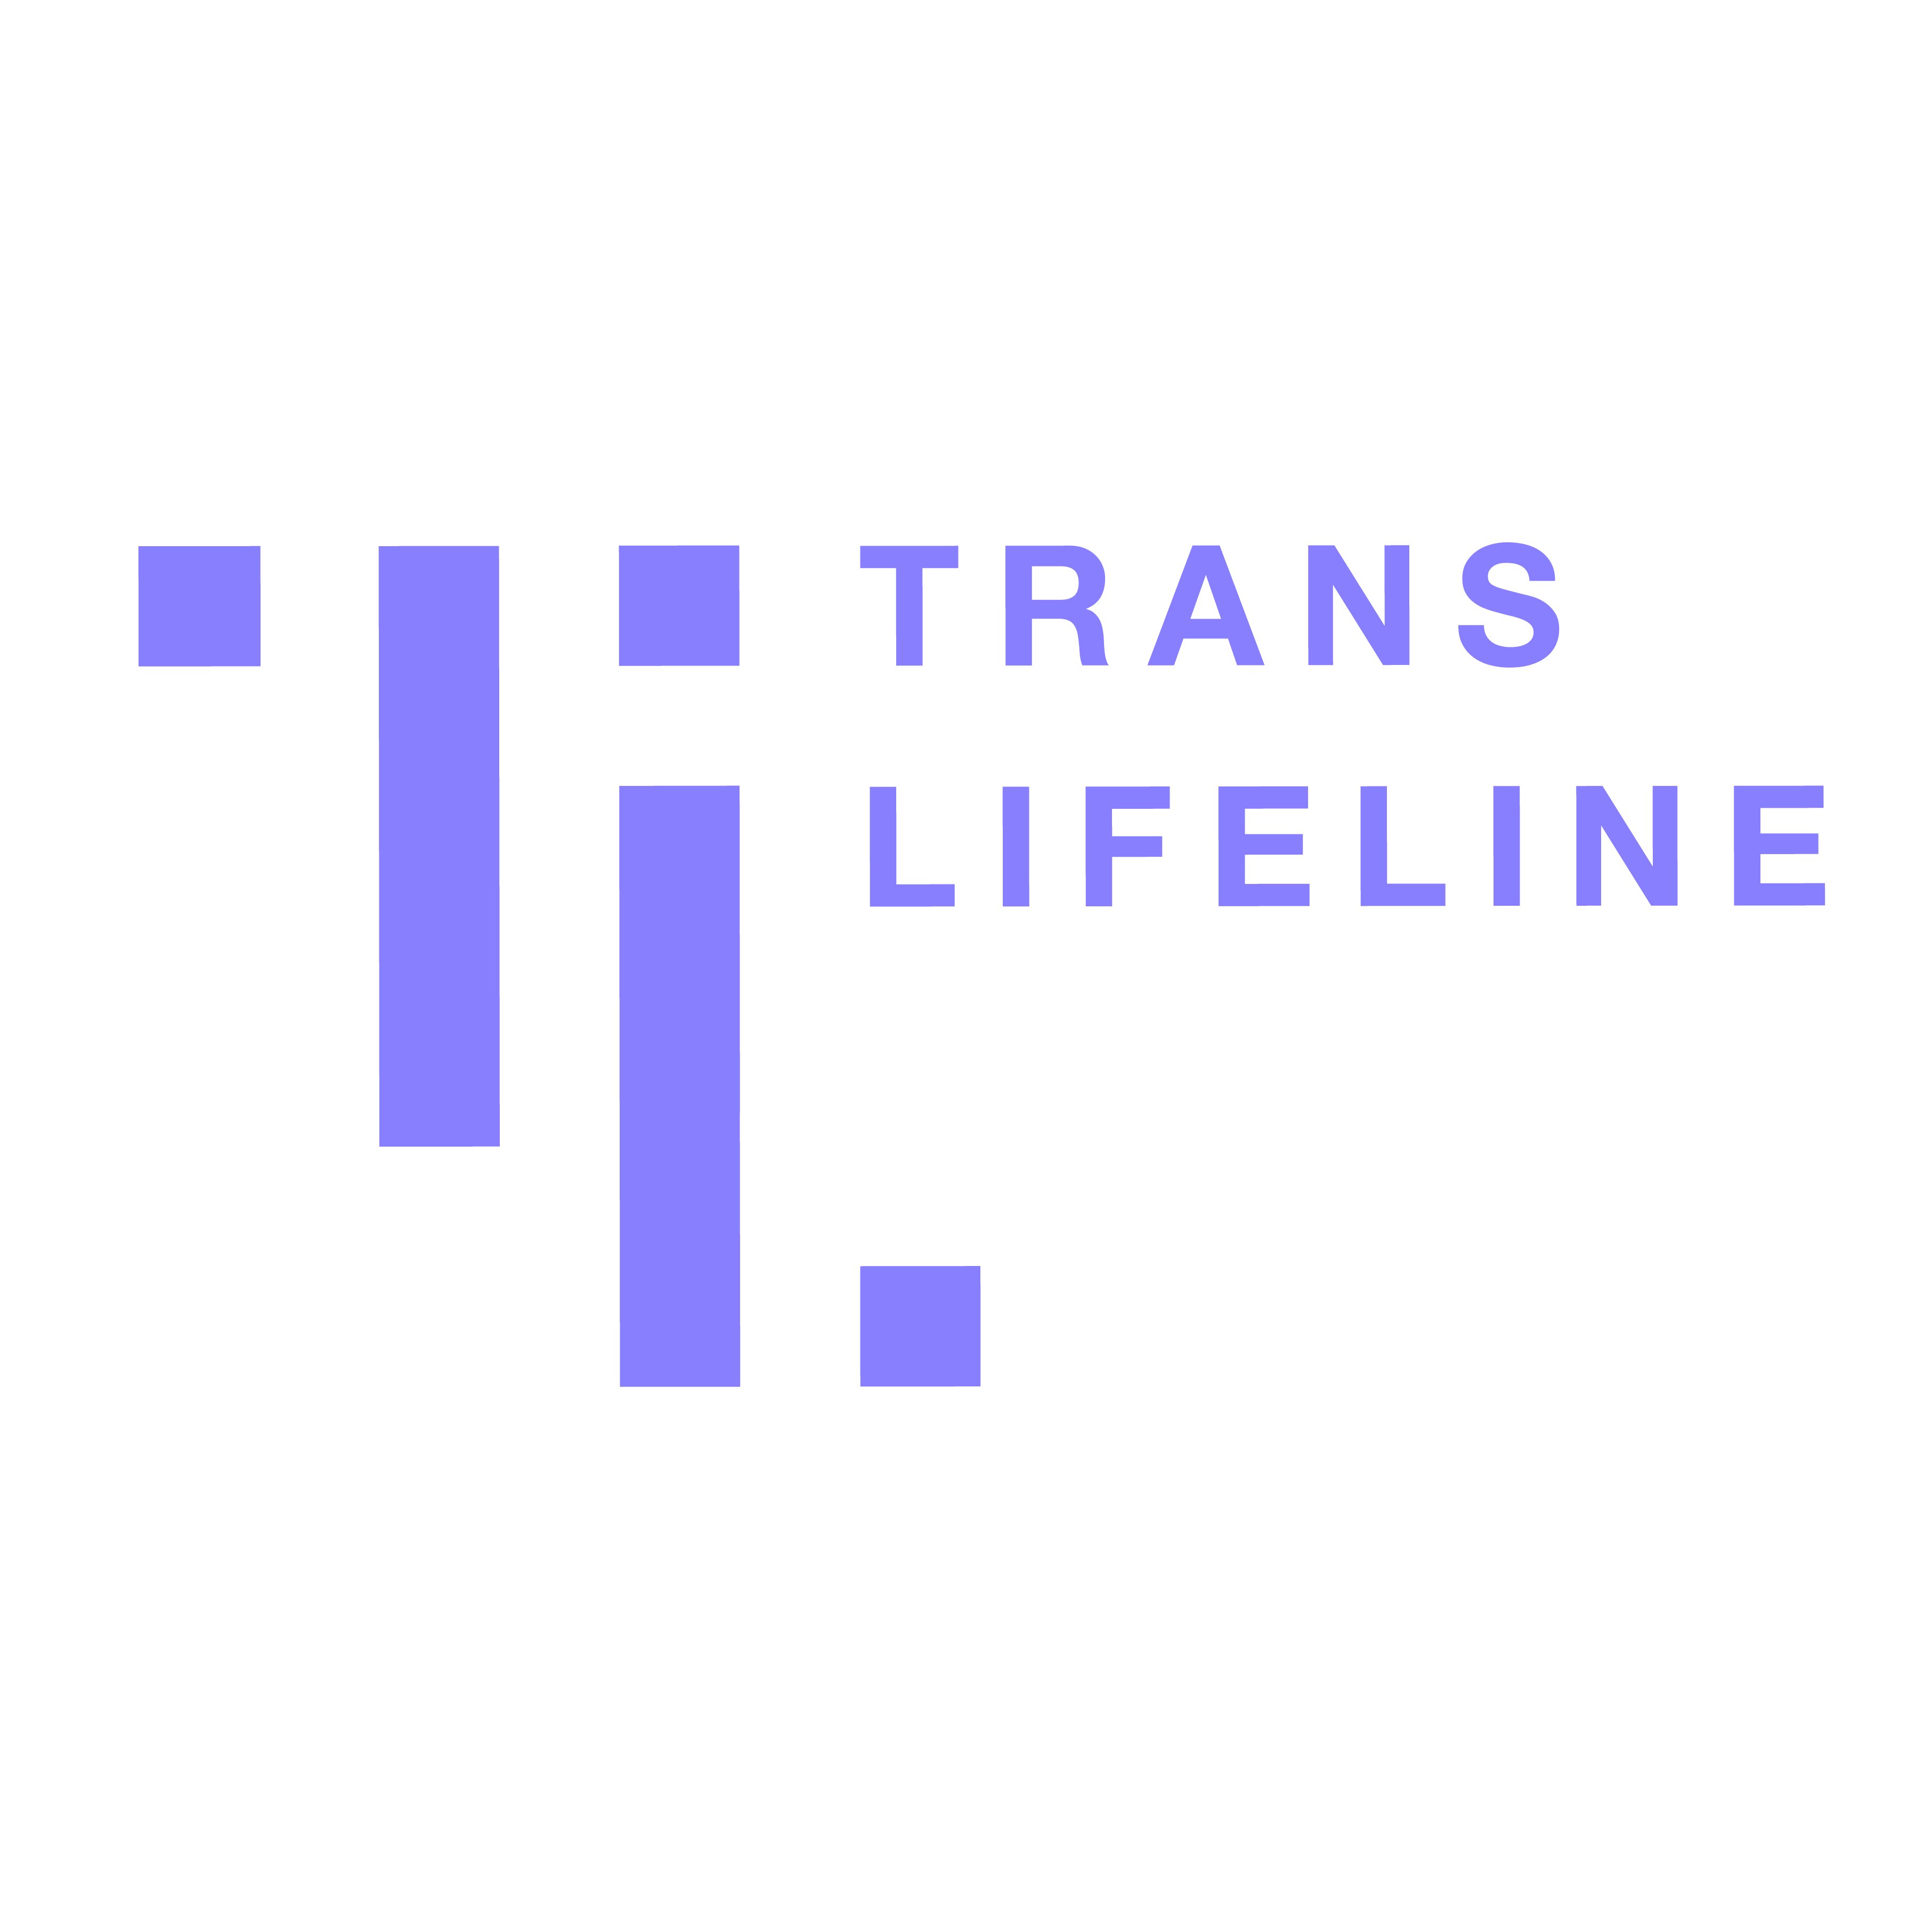 trans lifeline logo.png